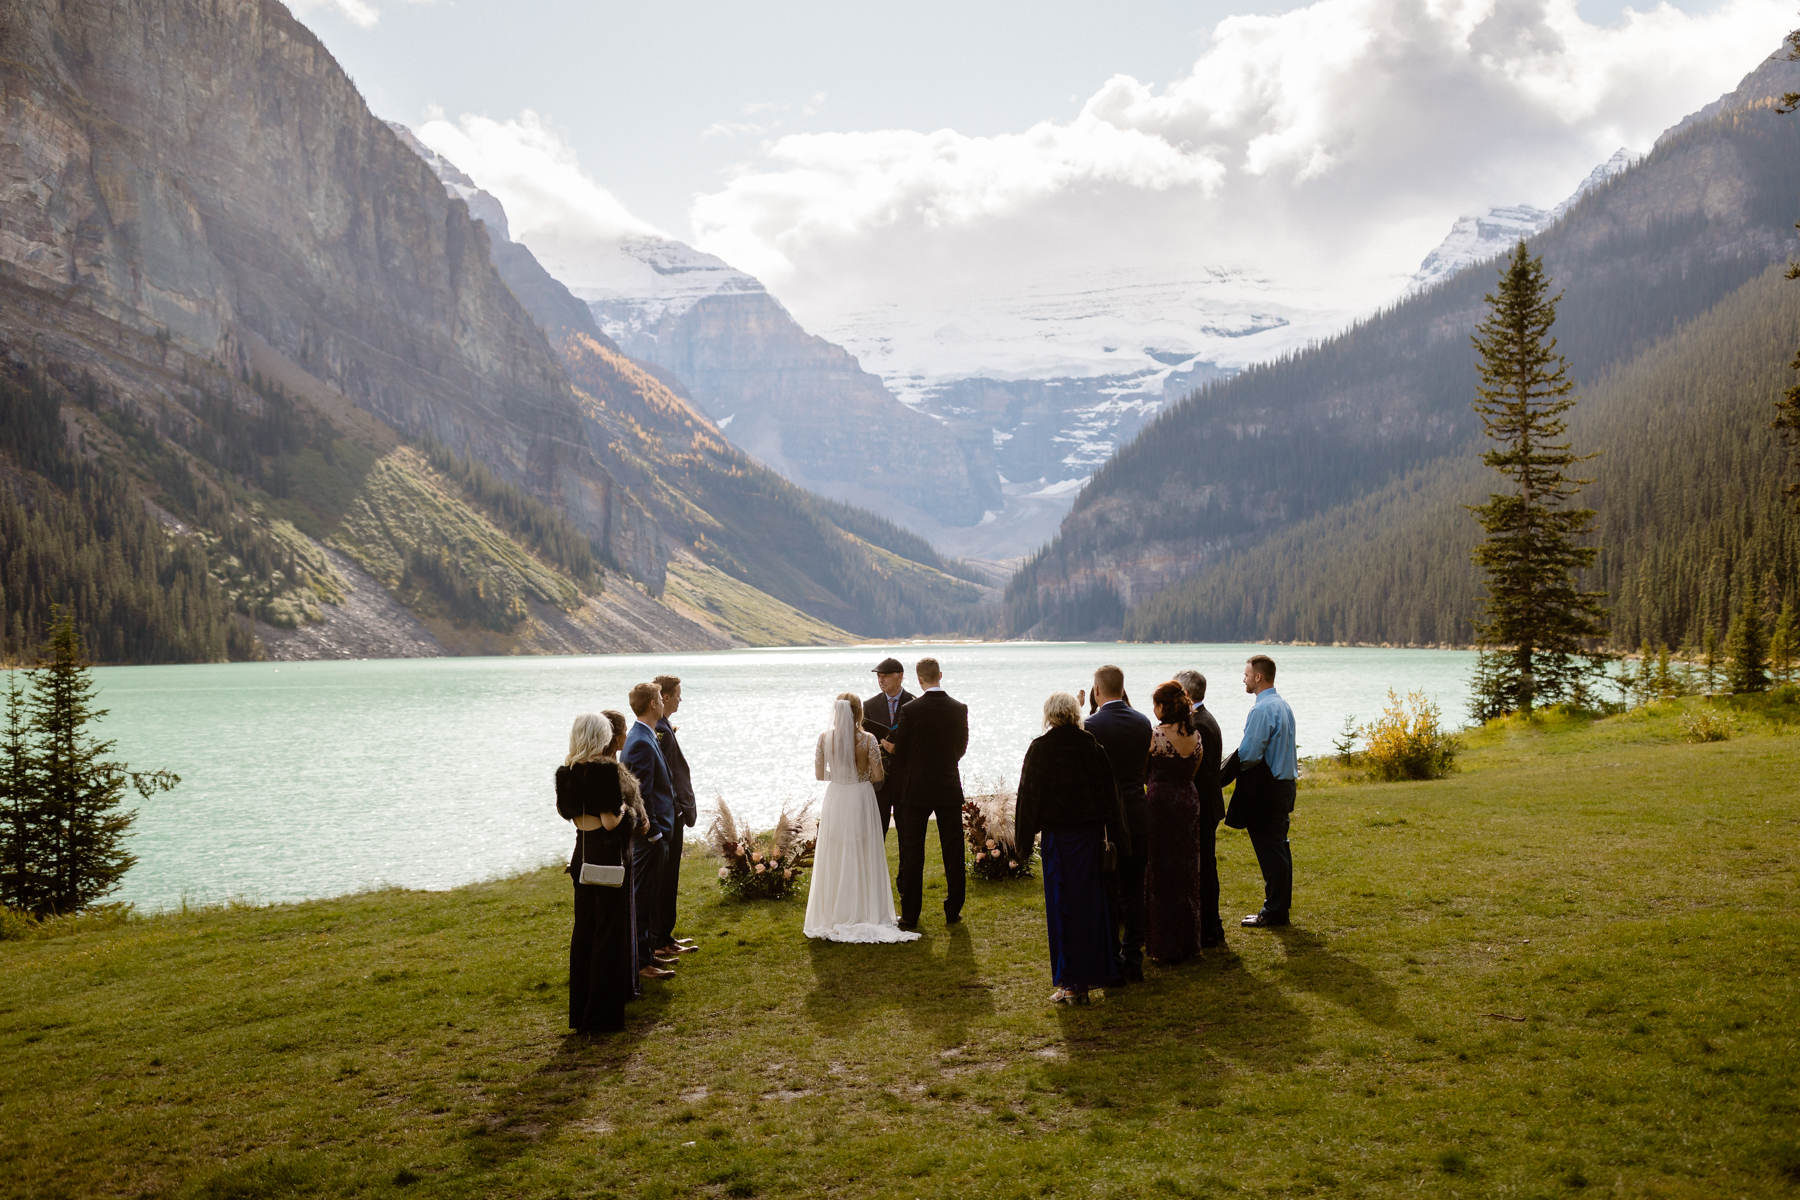 Moraine Lake wedding photos - Image 12